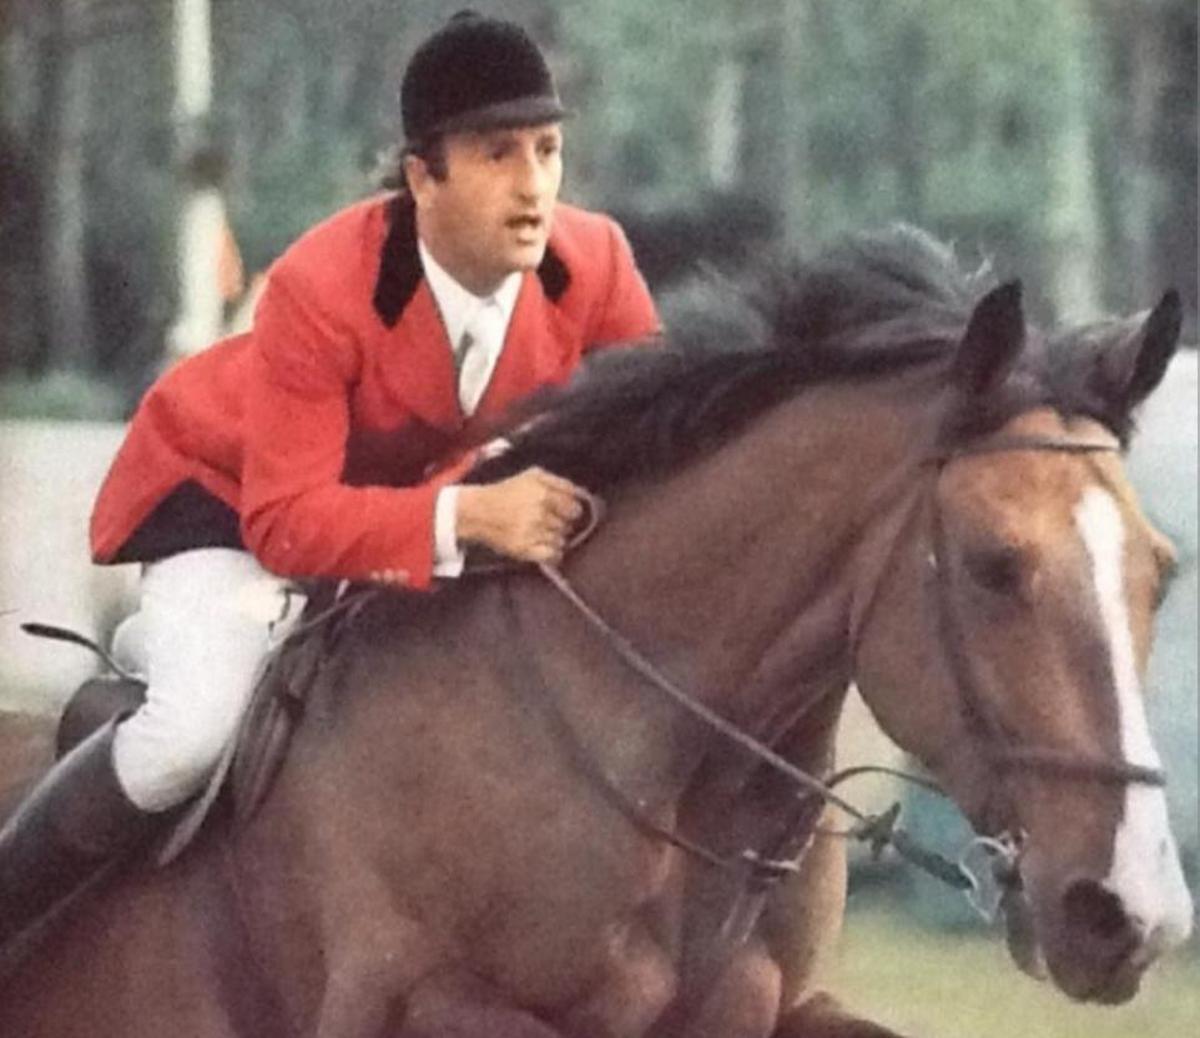 Muere Luis Jaime Carvajal, jinete olímpico en Múnich en 1972